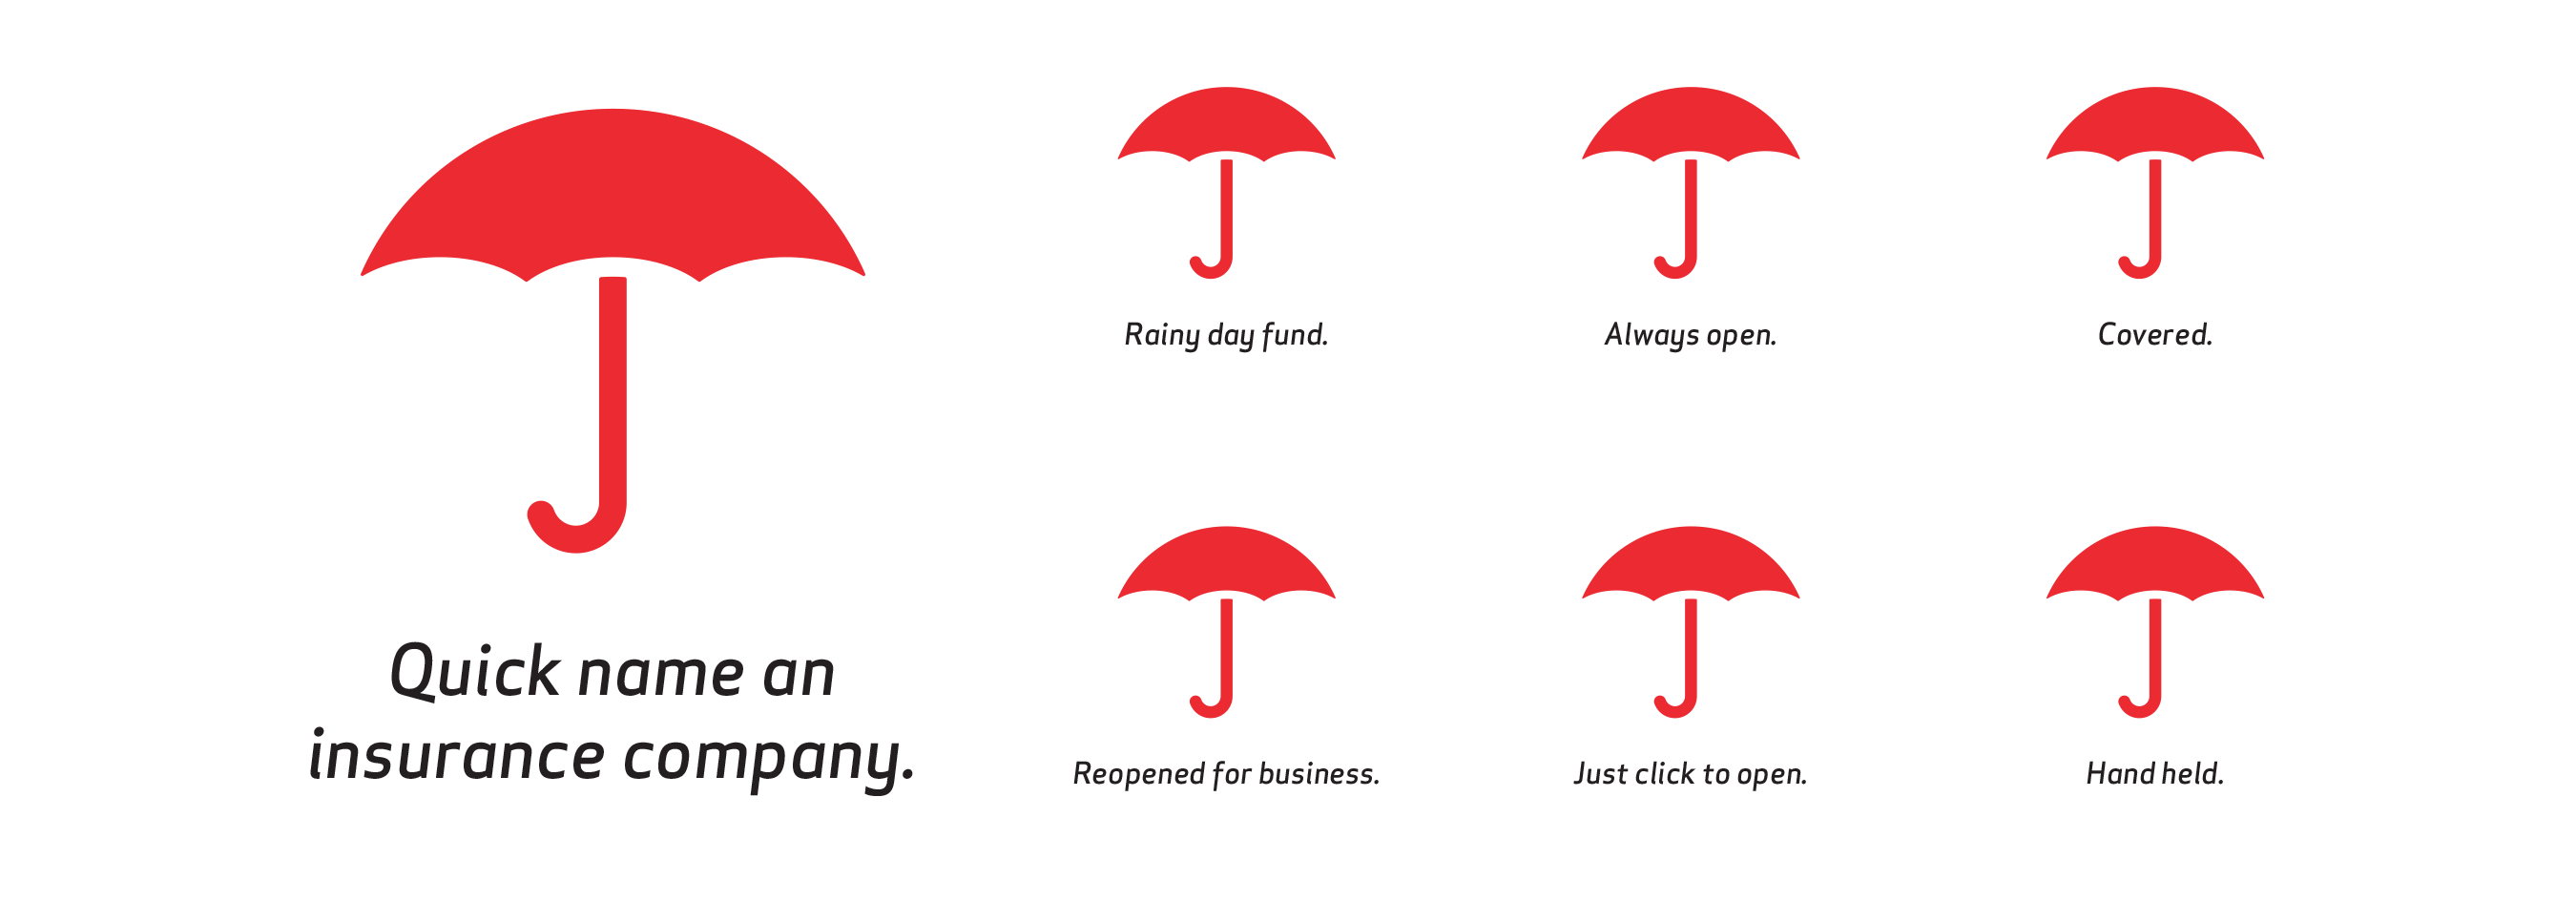 Red Umbrella Travelers Logo - Travelers Insurance - Replace